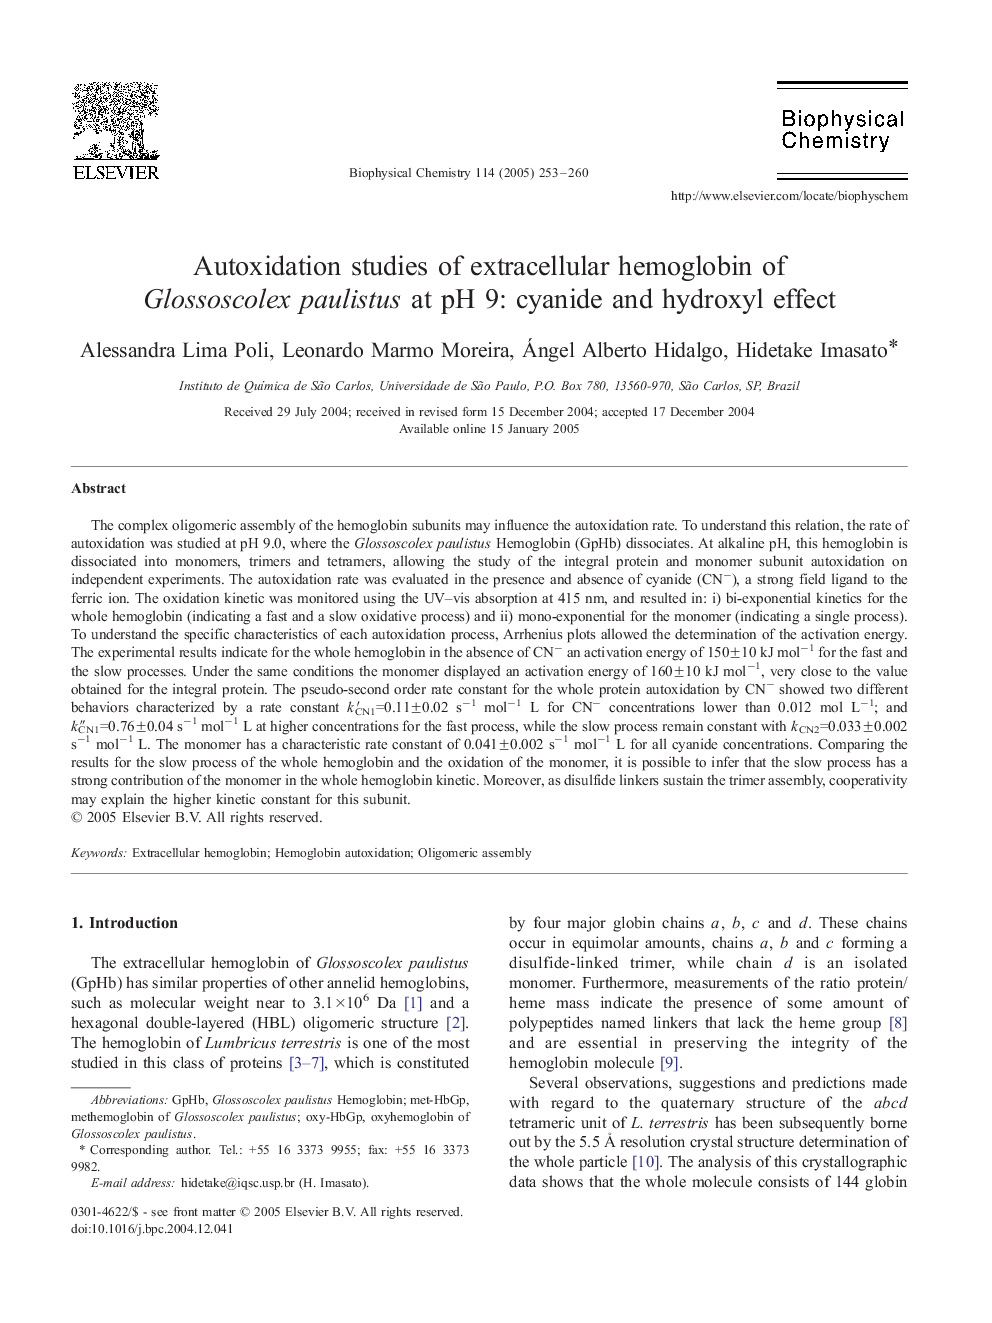 Autoxidation studies of extracellular hemoglobin of Glossoscolex paulistus at pH 9: cyanide and hydroxyl effect